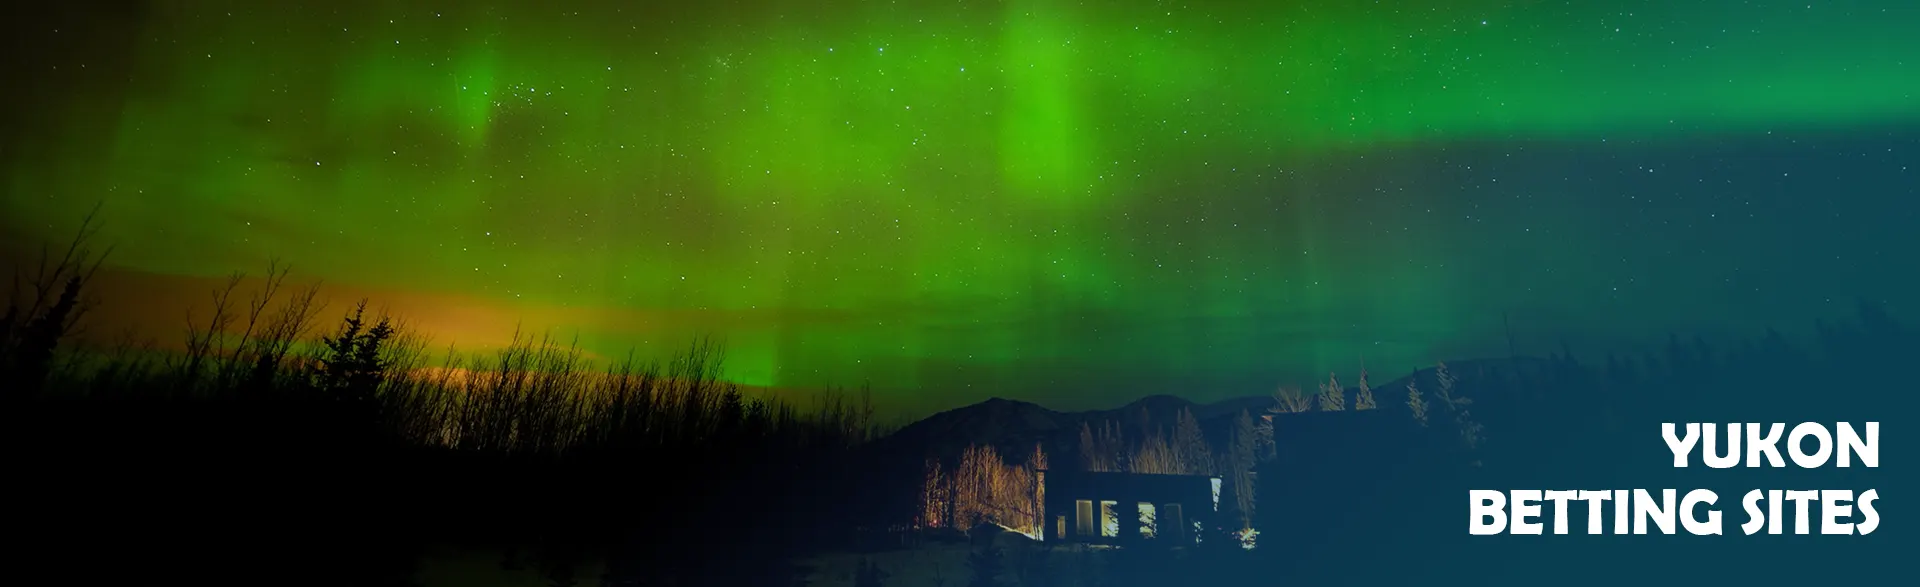 Stunning Northern Lights over Yukon landscape, representing Yukon betting sites.